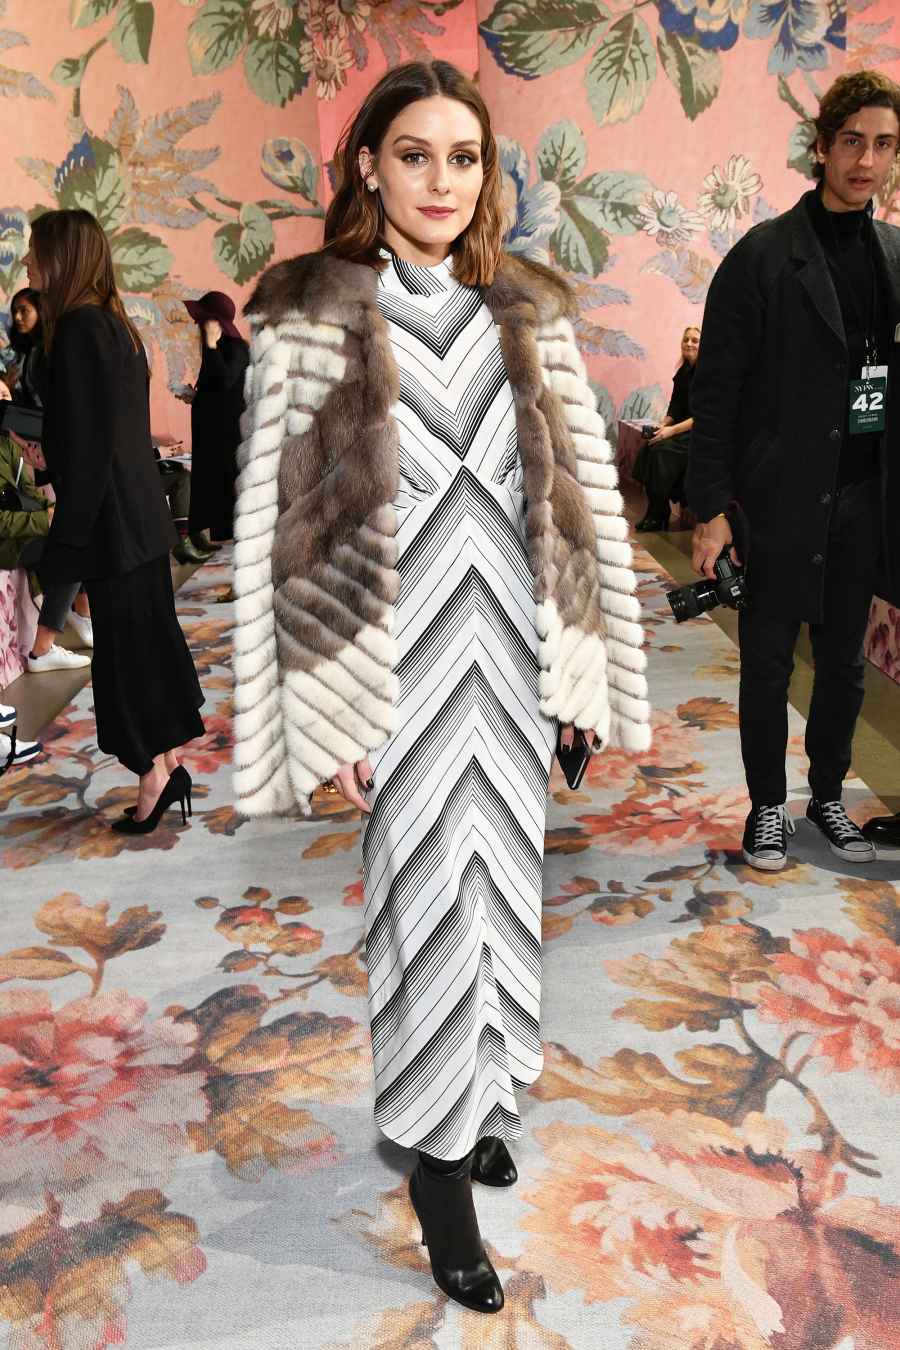 NYFW: Kendall Jenner pairs plaid mini dress and fur coat